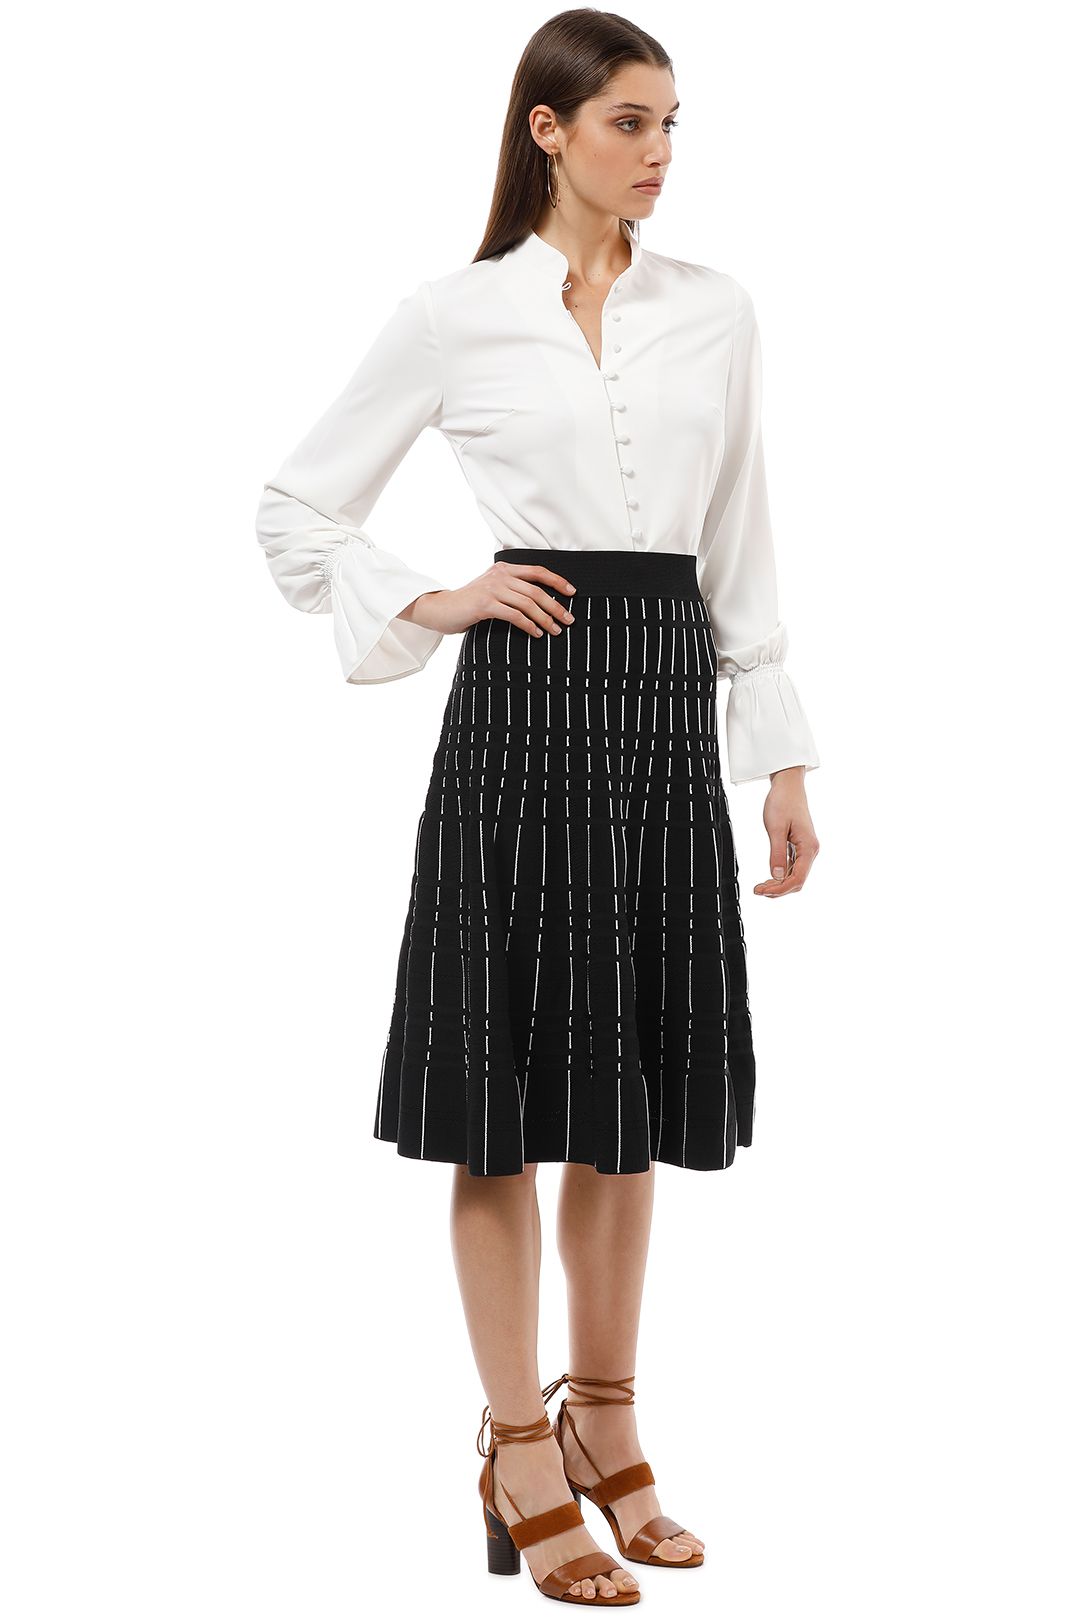 Saba - Milly Milano Skirt - Black White - Side